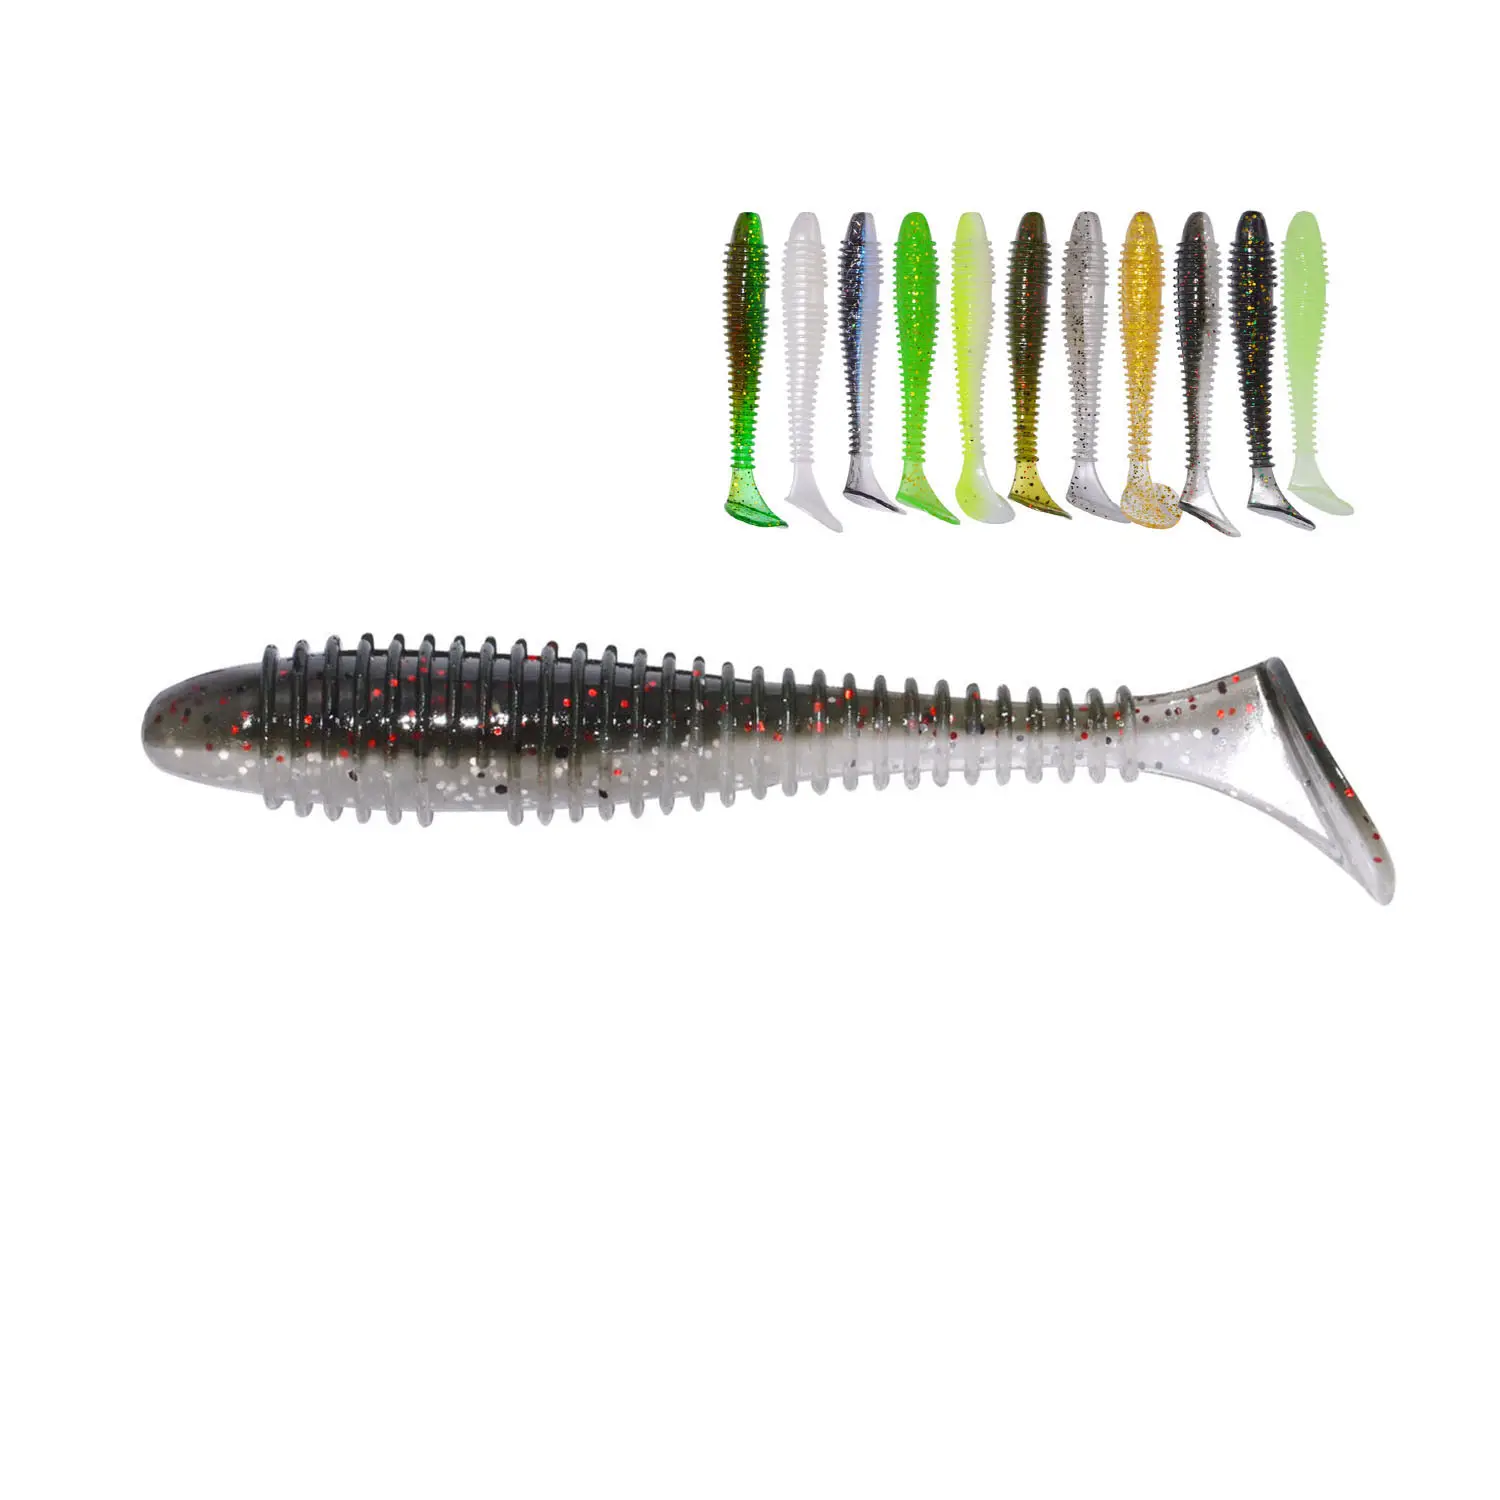 Afishlure-Cebo suave con cola de tornillo T, 55mm/1,45g, SwimBait, cola de paleta, gusano de plástico, señuelo de pesca con cola en T pequeña, cebo biónico suave